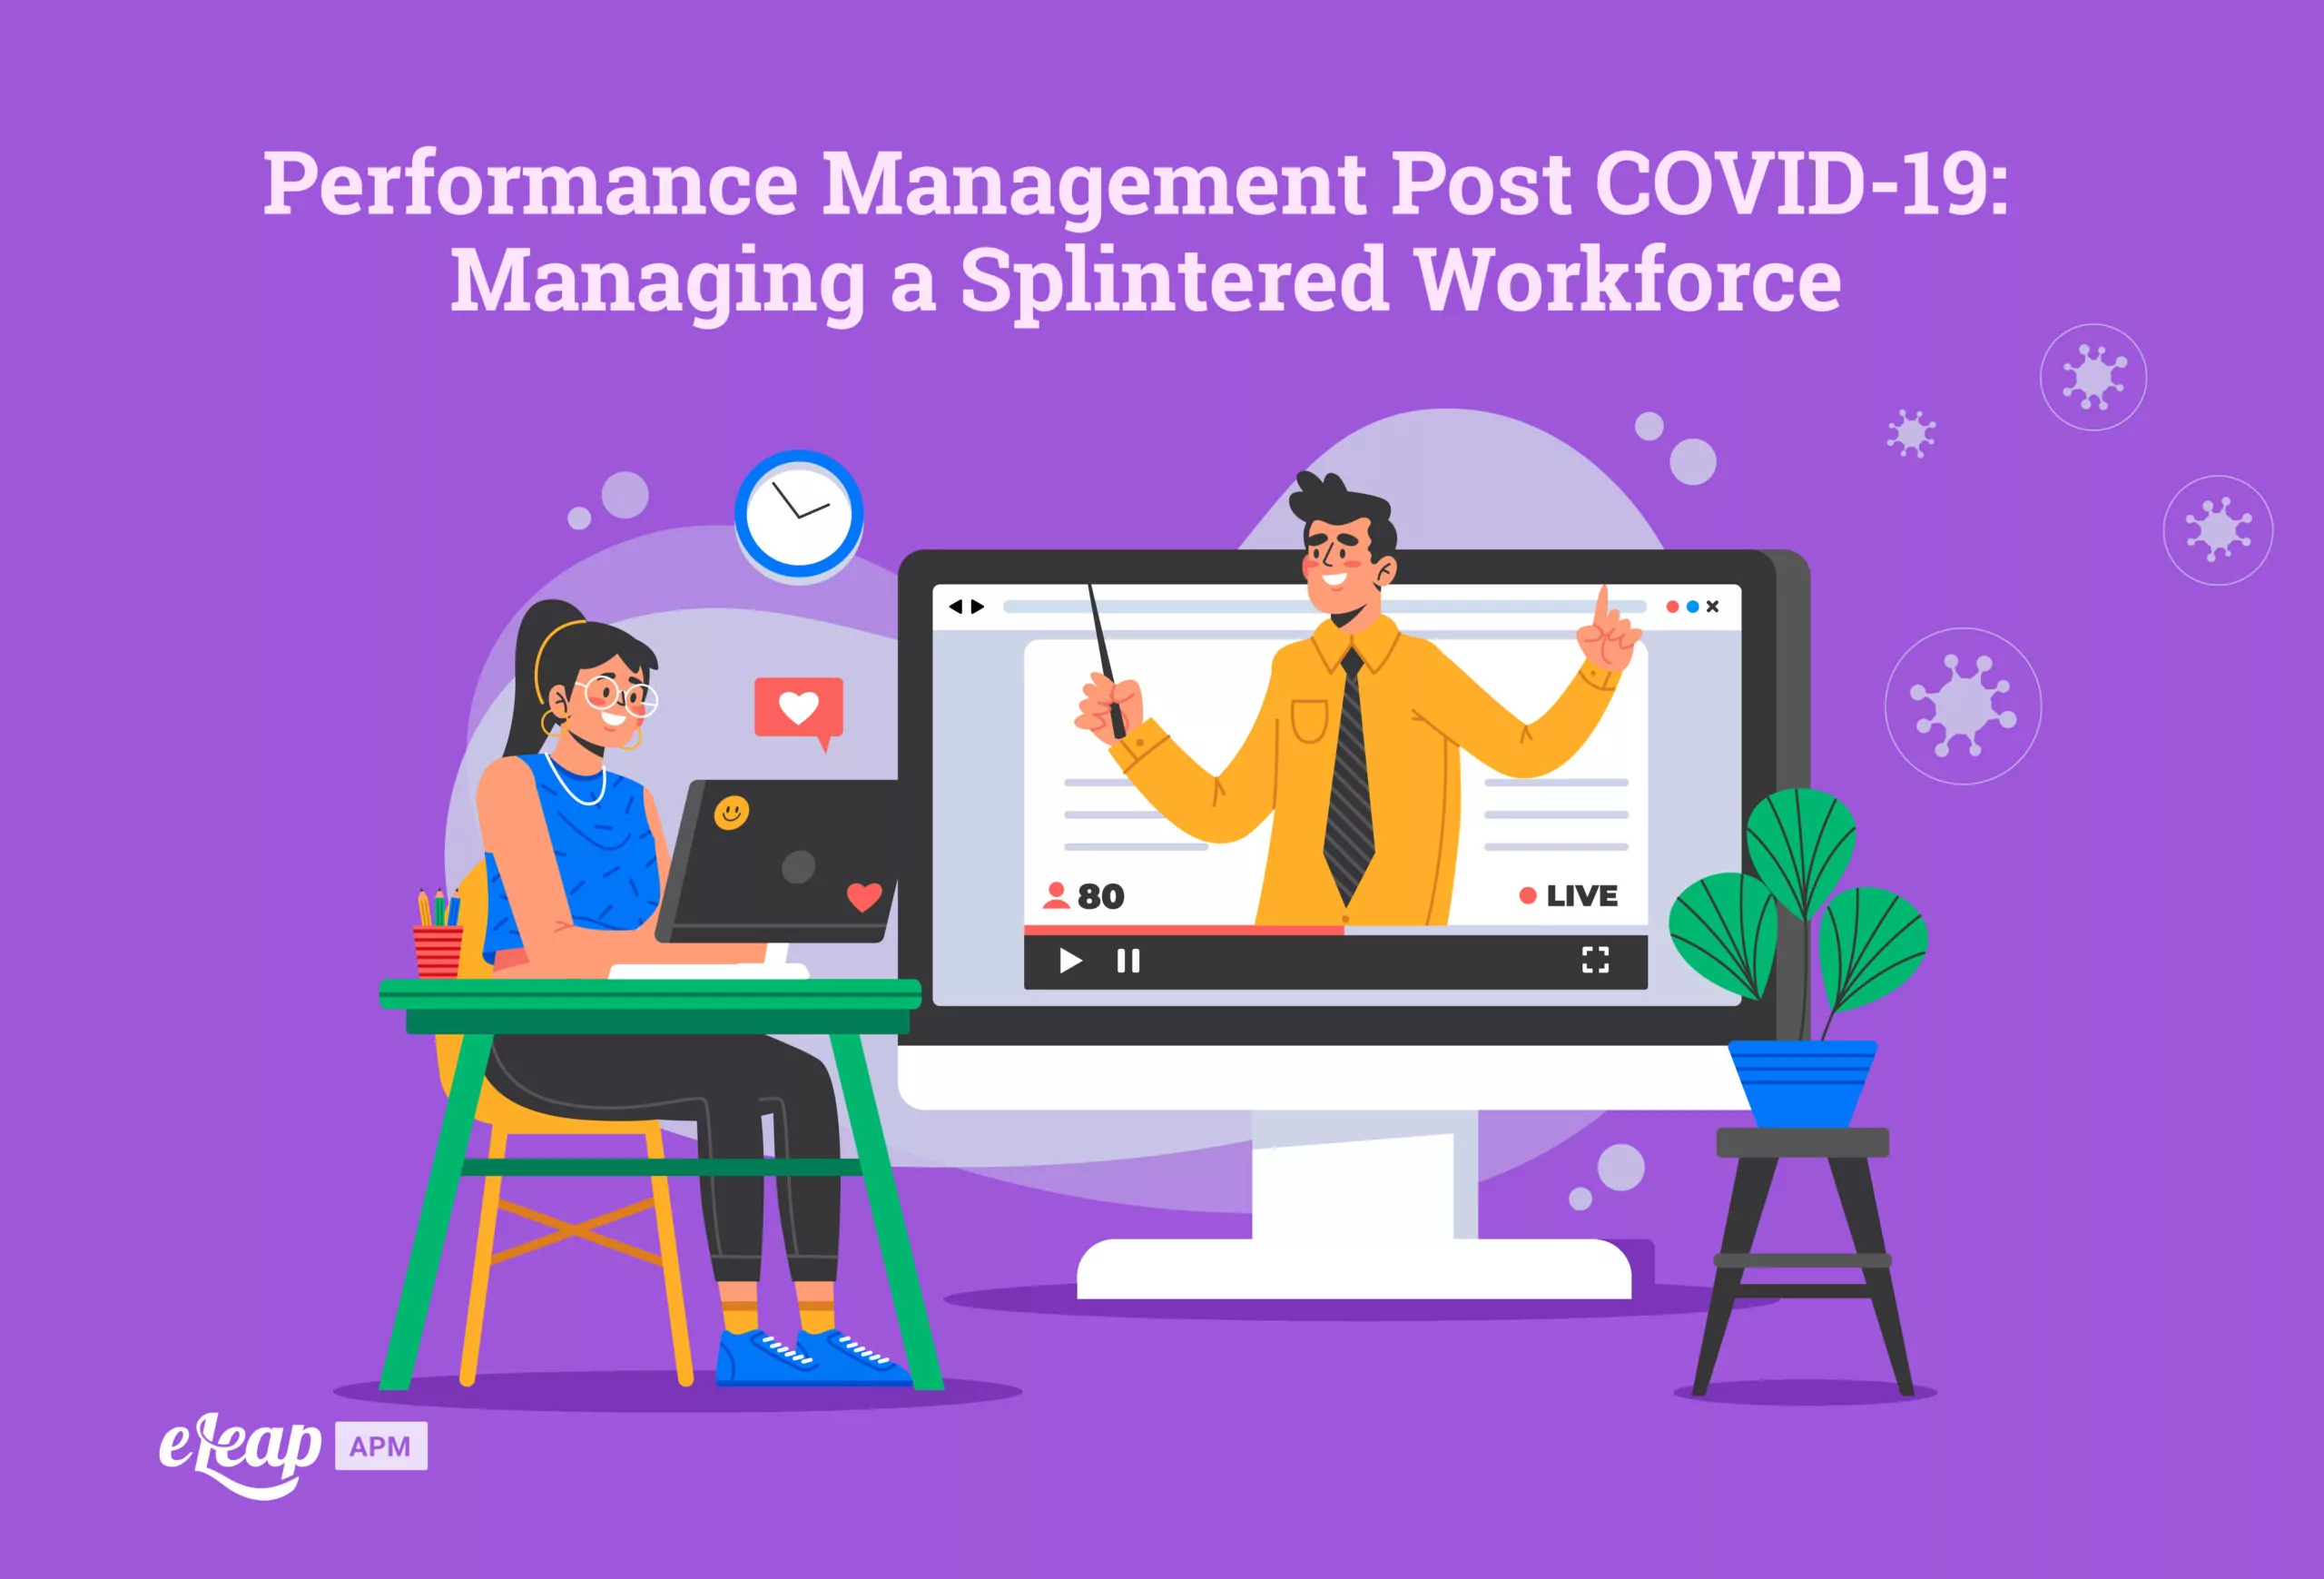 Performance Management Post COVID-19: Managing a Splintered Workforce